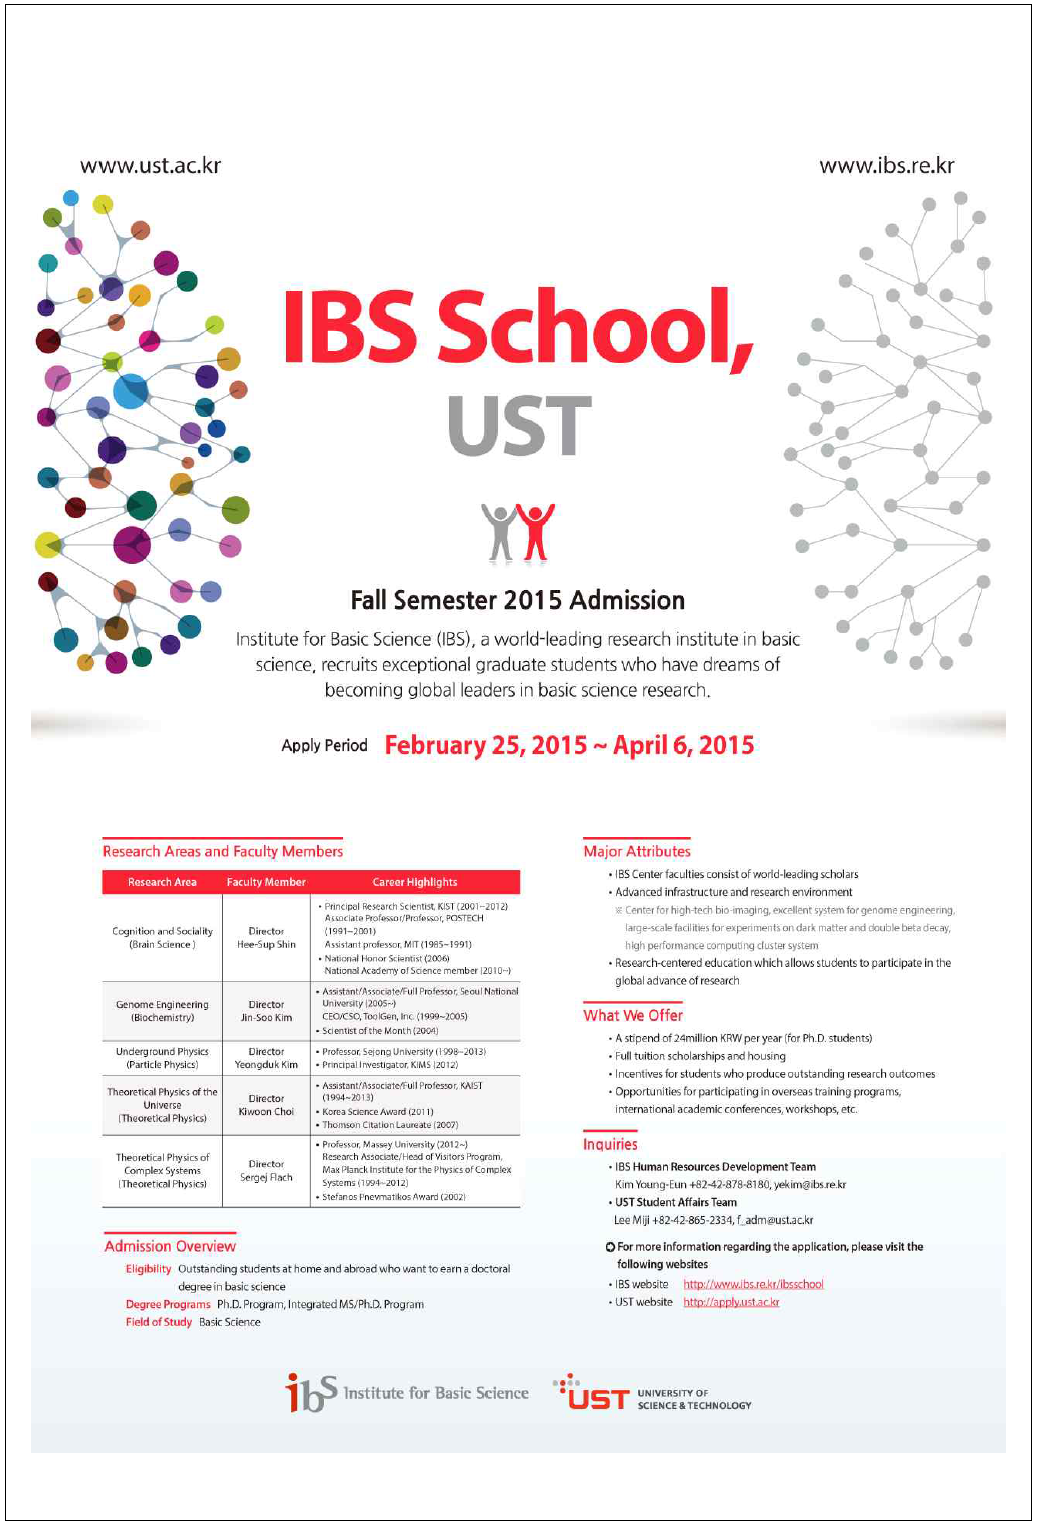 IBS School, UST 2015 후기 신입생 모집 포스터형 광고(영문)